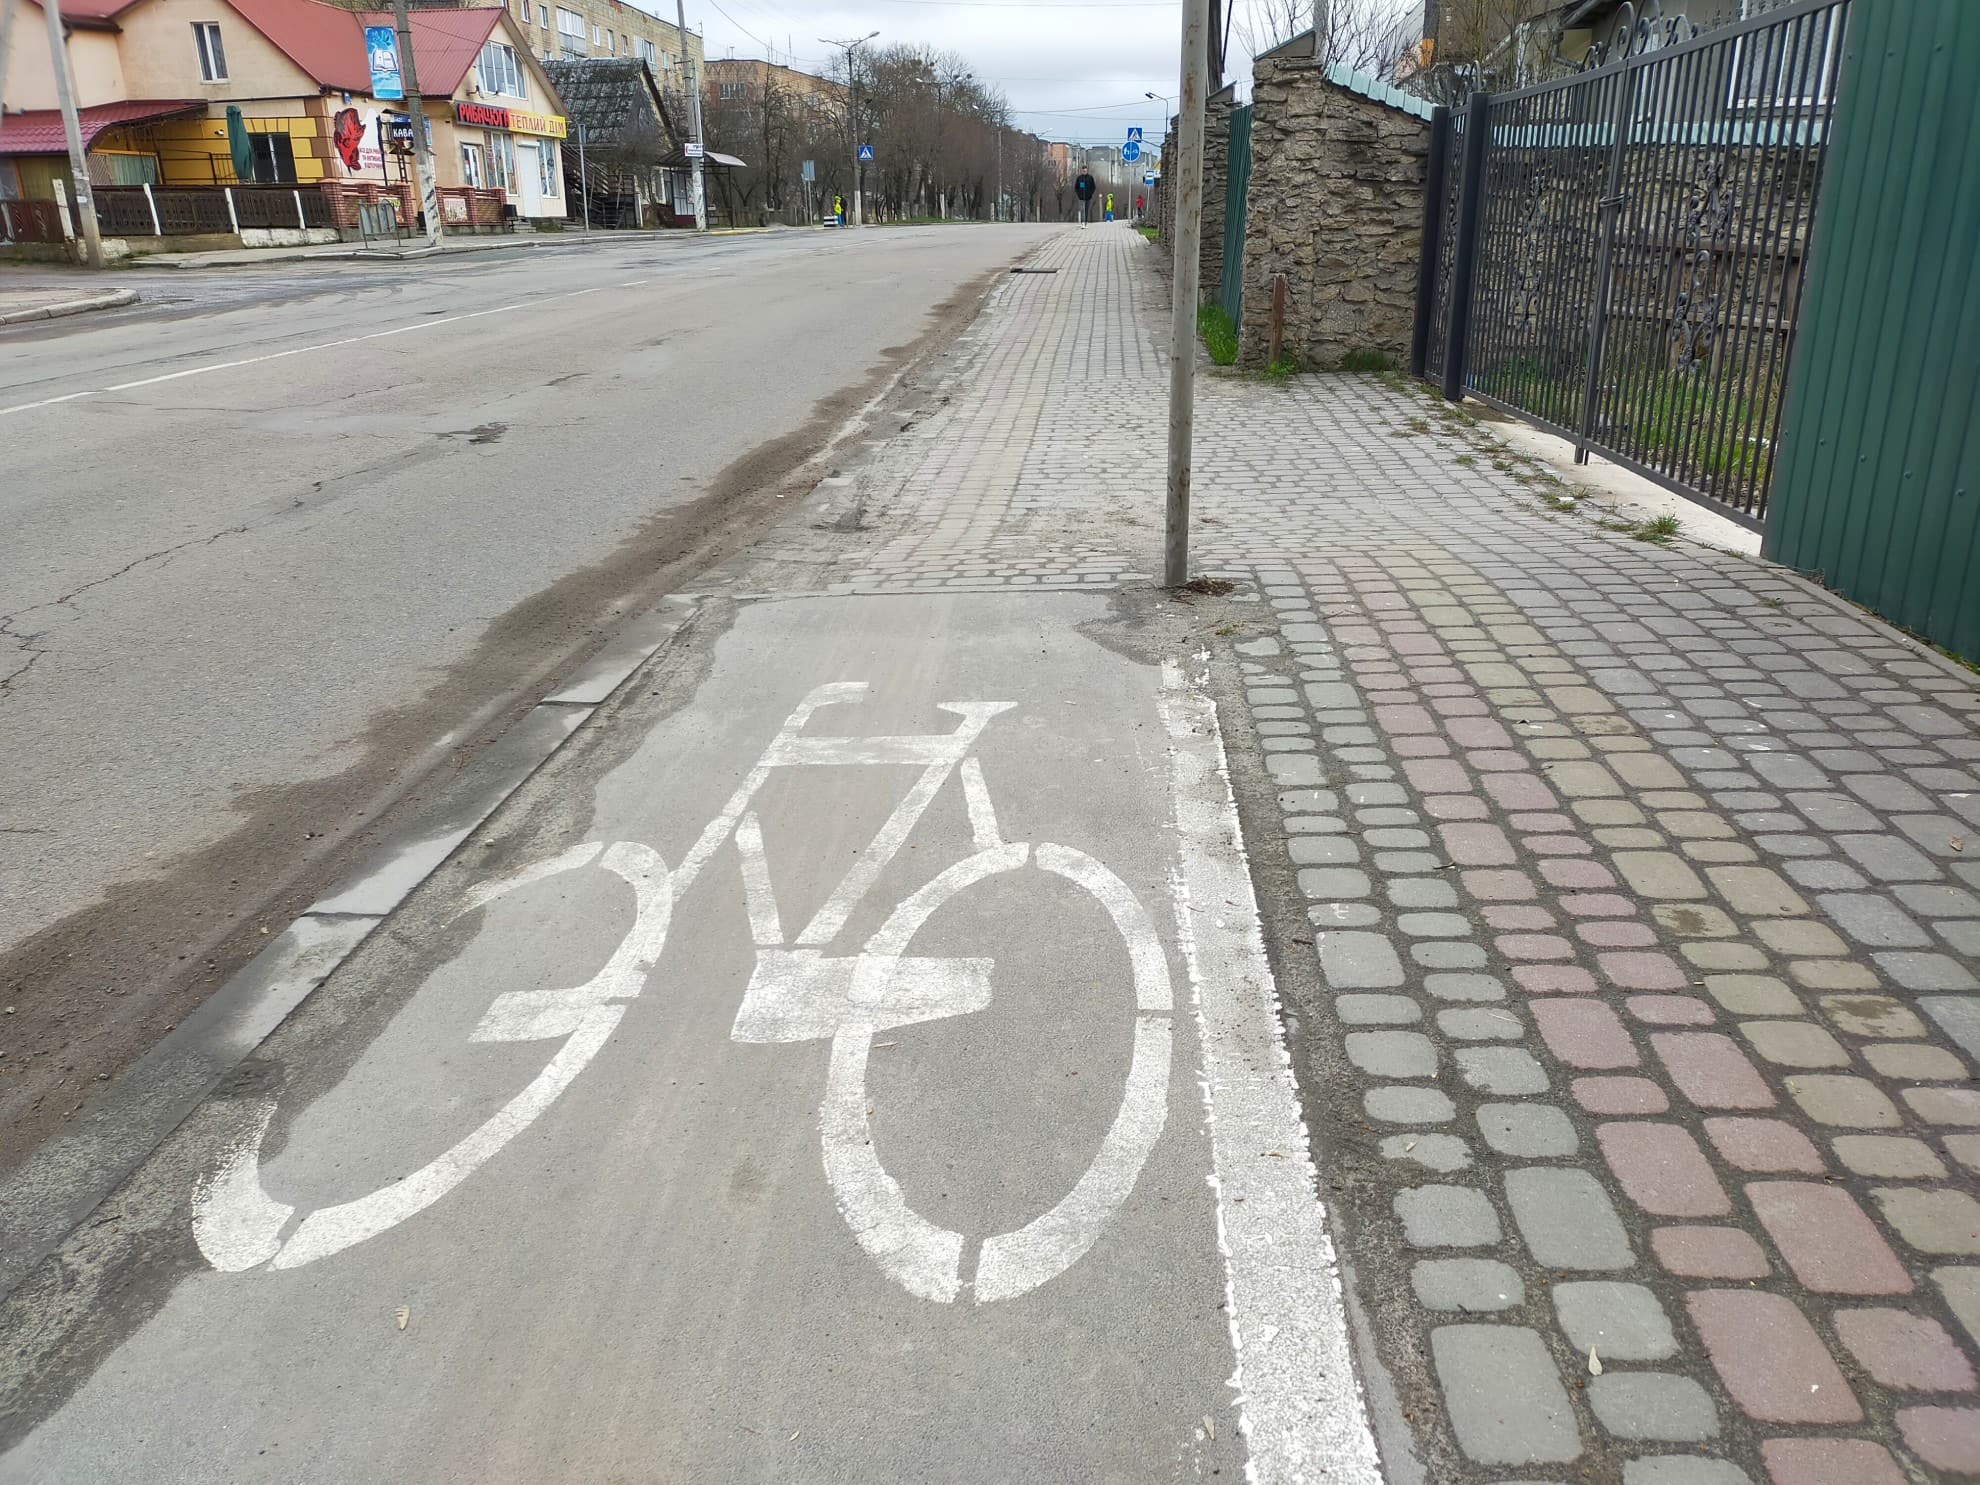 Dubno bike path 2